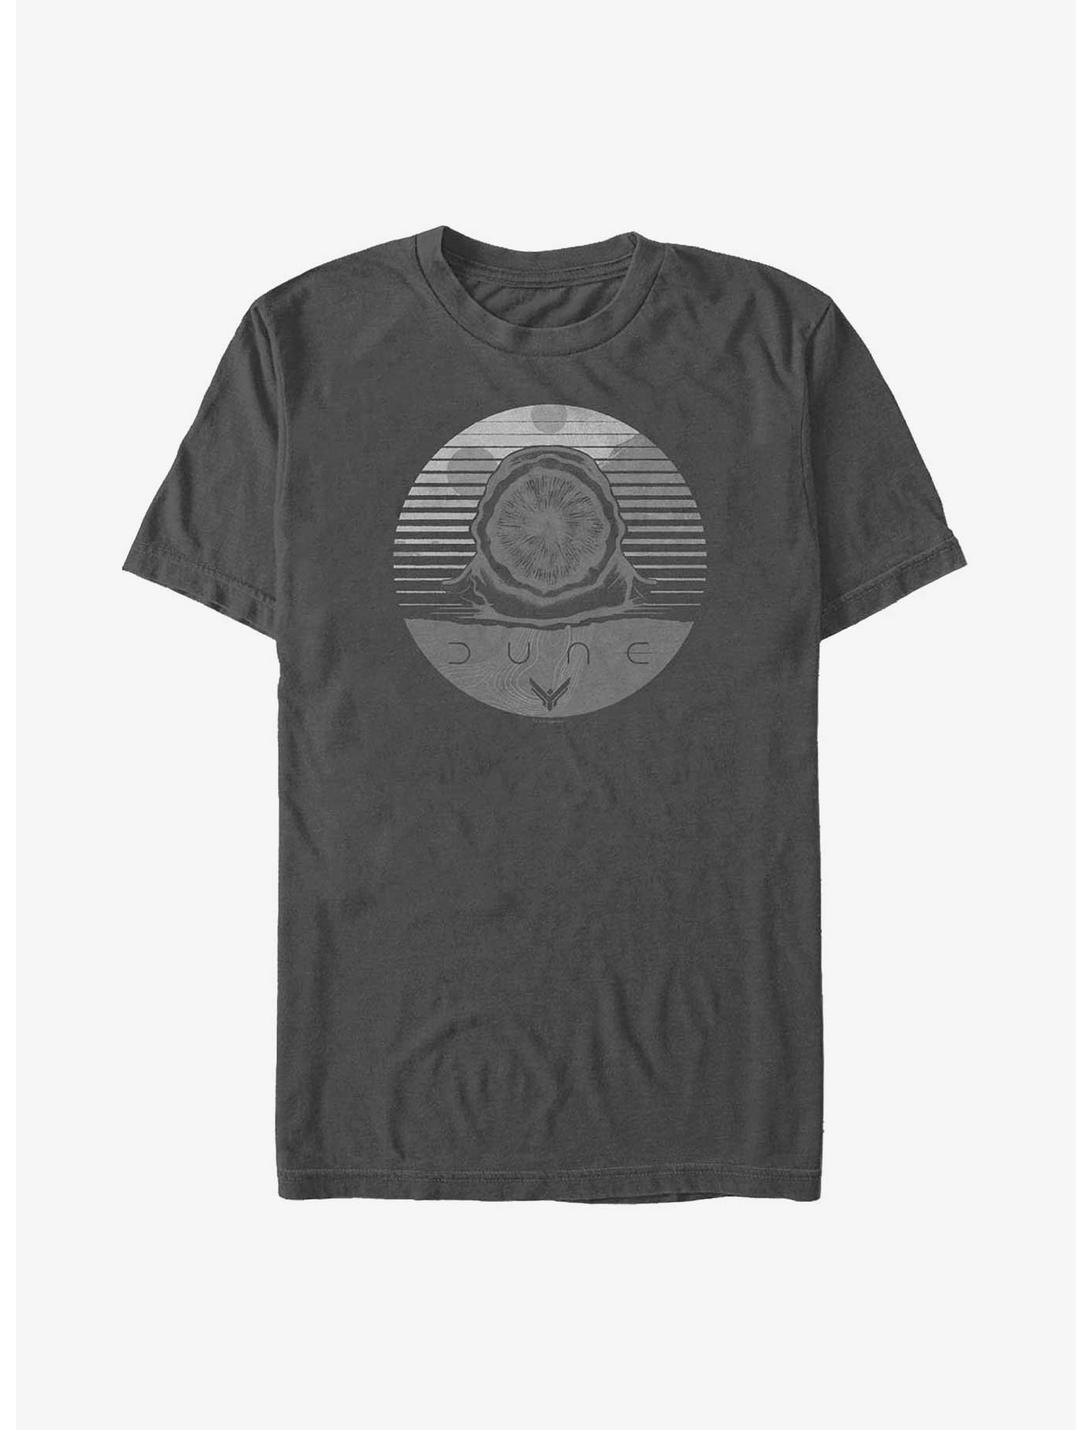 Dune Arrakis Stamp T-Shirt, CHARCOAL, hi-res